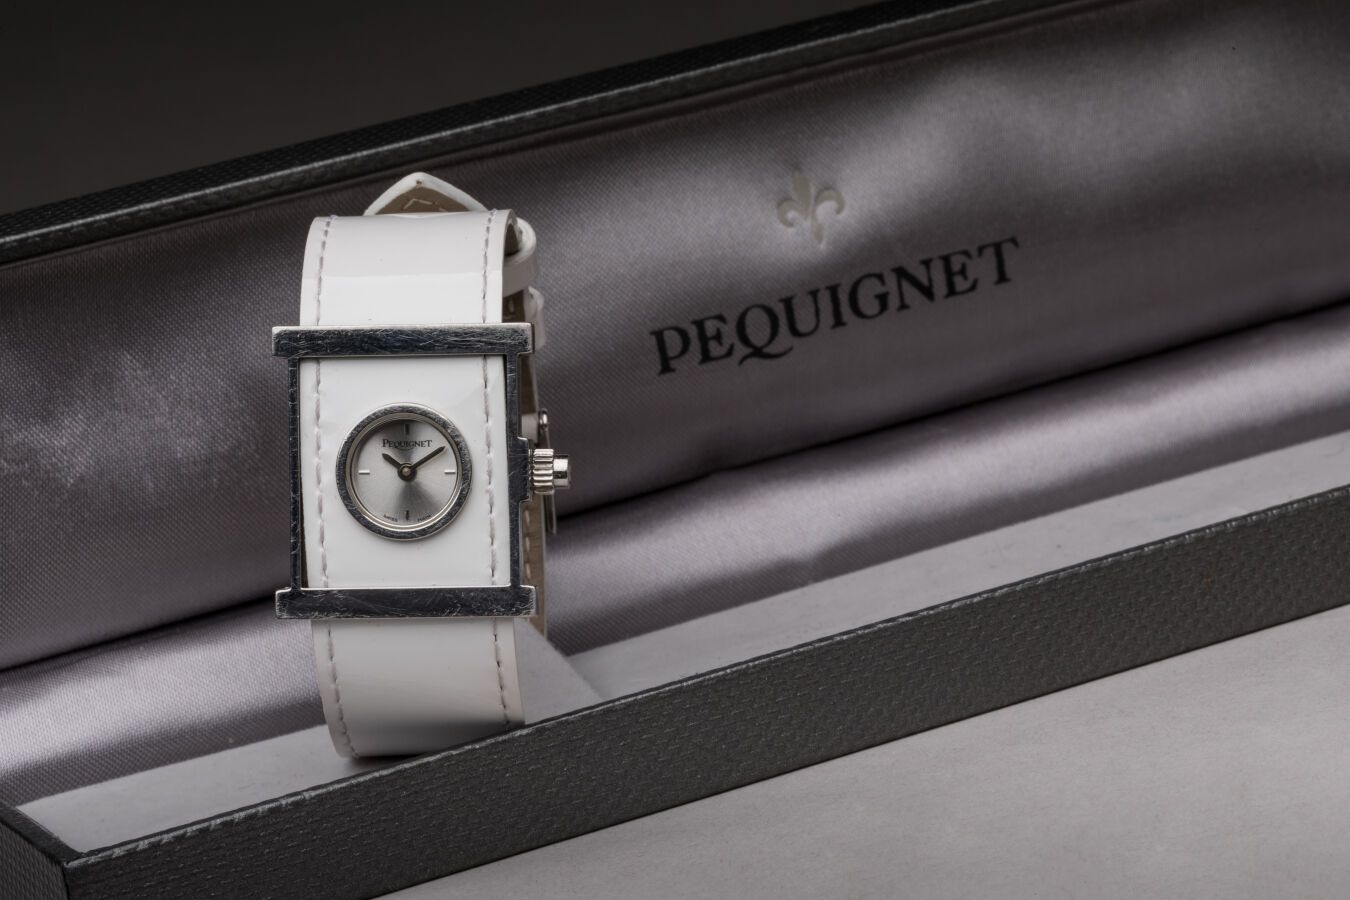 Null EMILE PEQUIGNET - 可更换表带的女士腕表。长方形精钢表壳，圆形银色表盘。石英机芯。27 x 29 mm。配有白色漆皮表带和盒子。